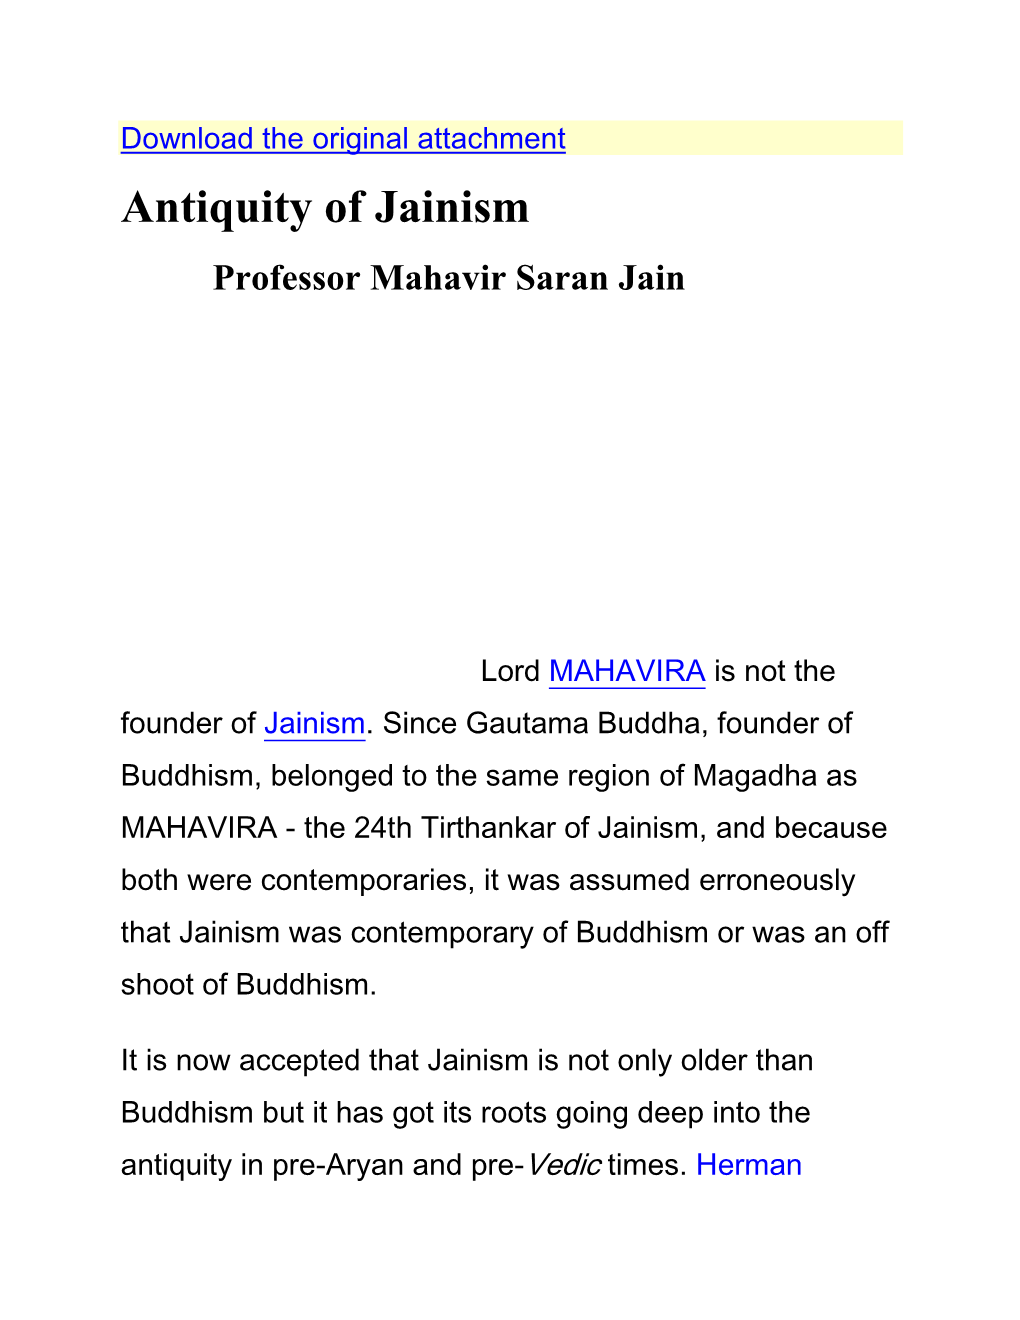 Antiquity of Jainism Professor Mahavir Saran Jain